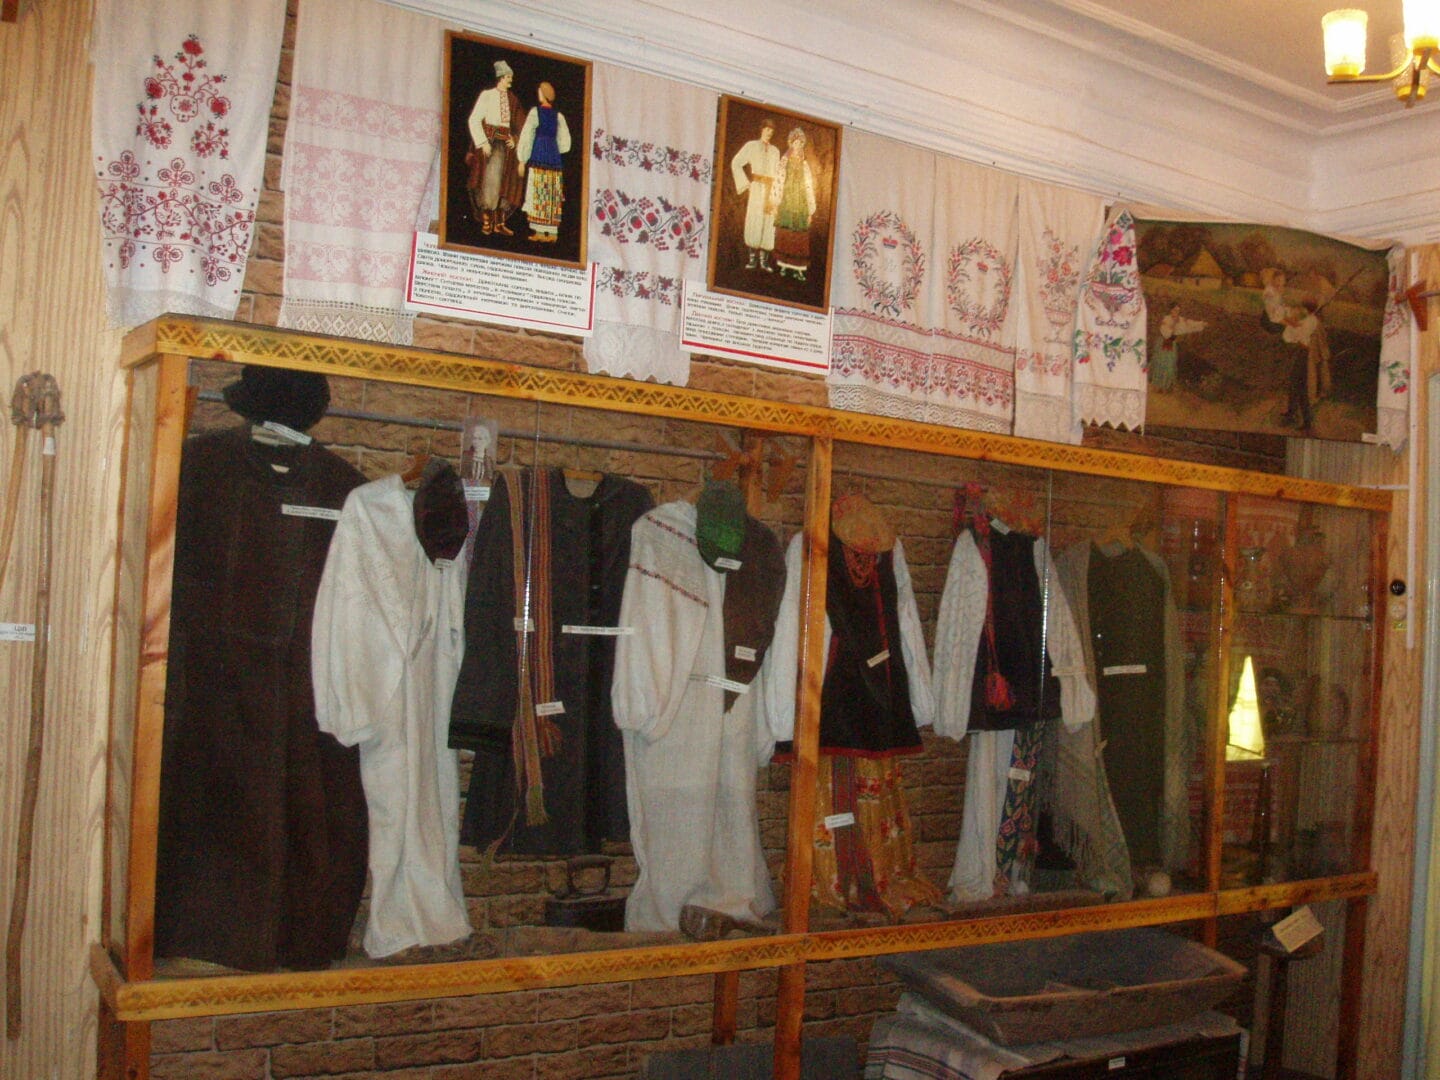 Exhibits at the Lokhvytsia museum